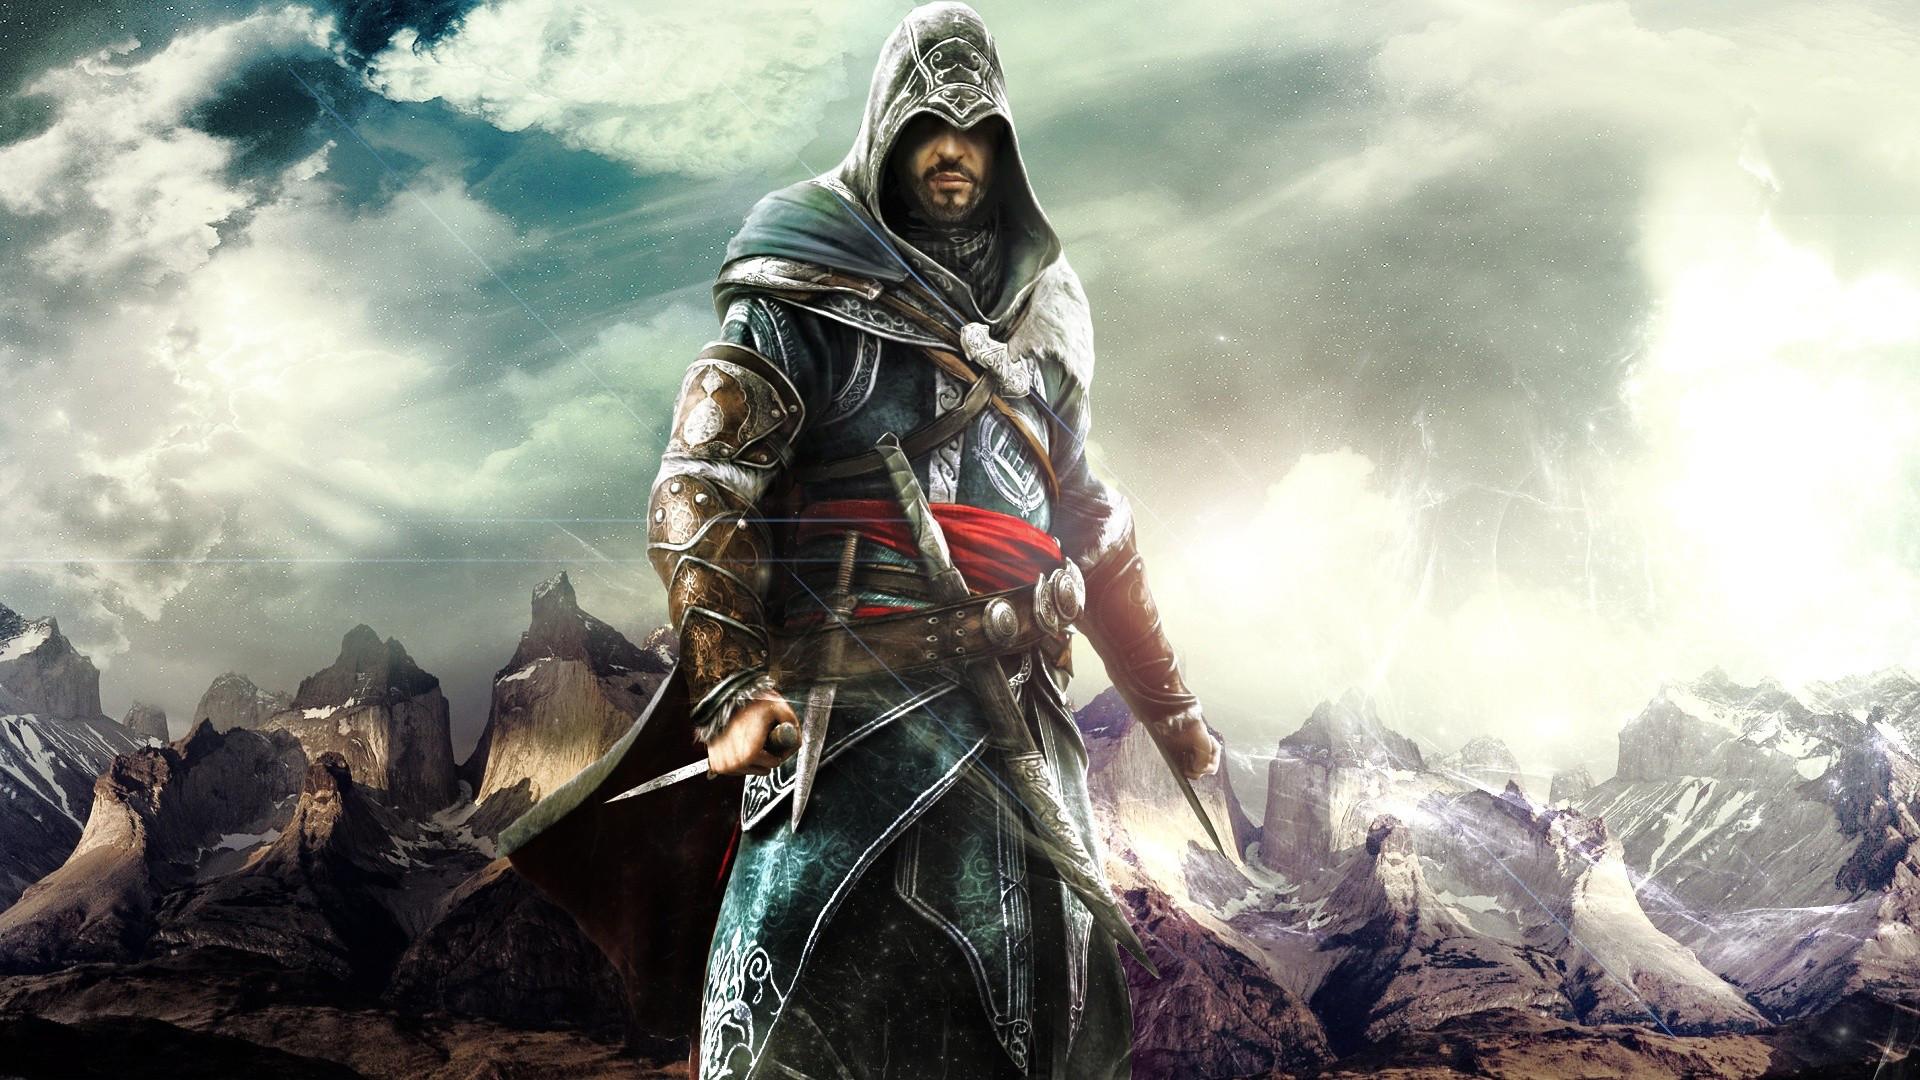 Hd Wallpaper Games Wallpapers For Mac Ezio The Best Assassin | HD ...